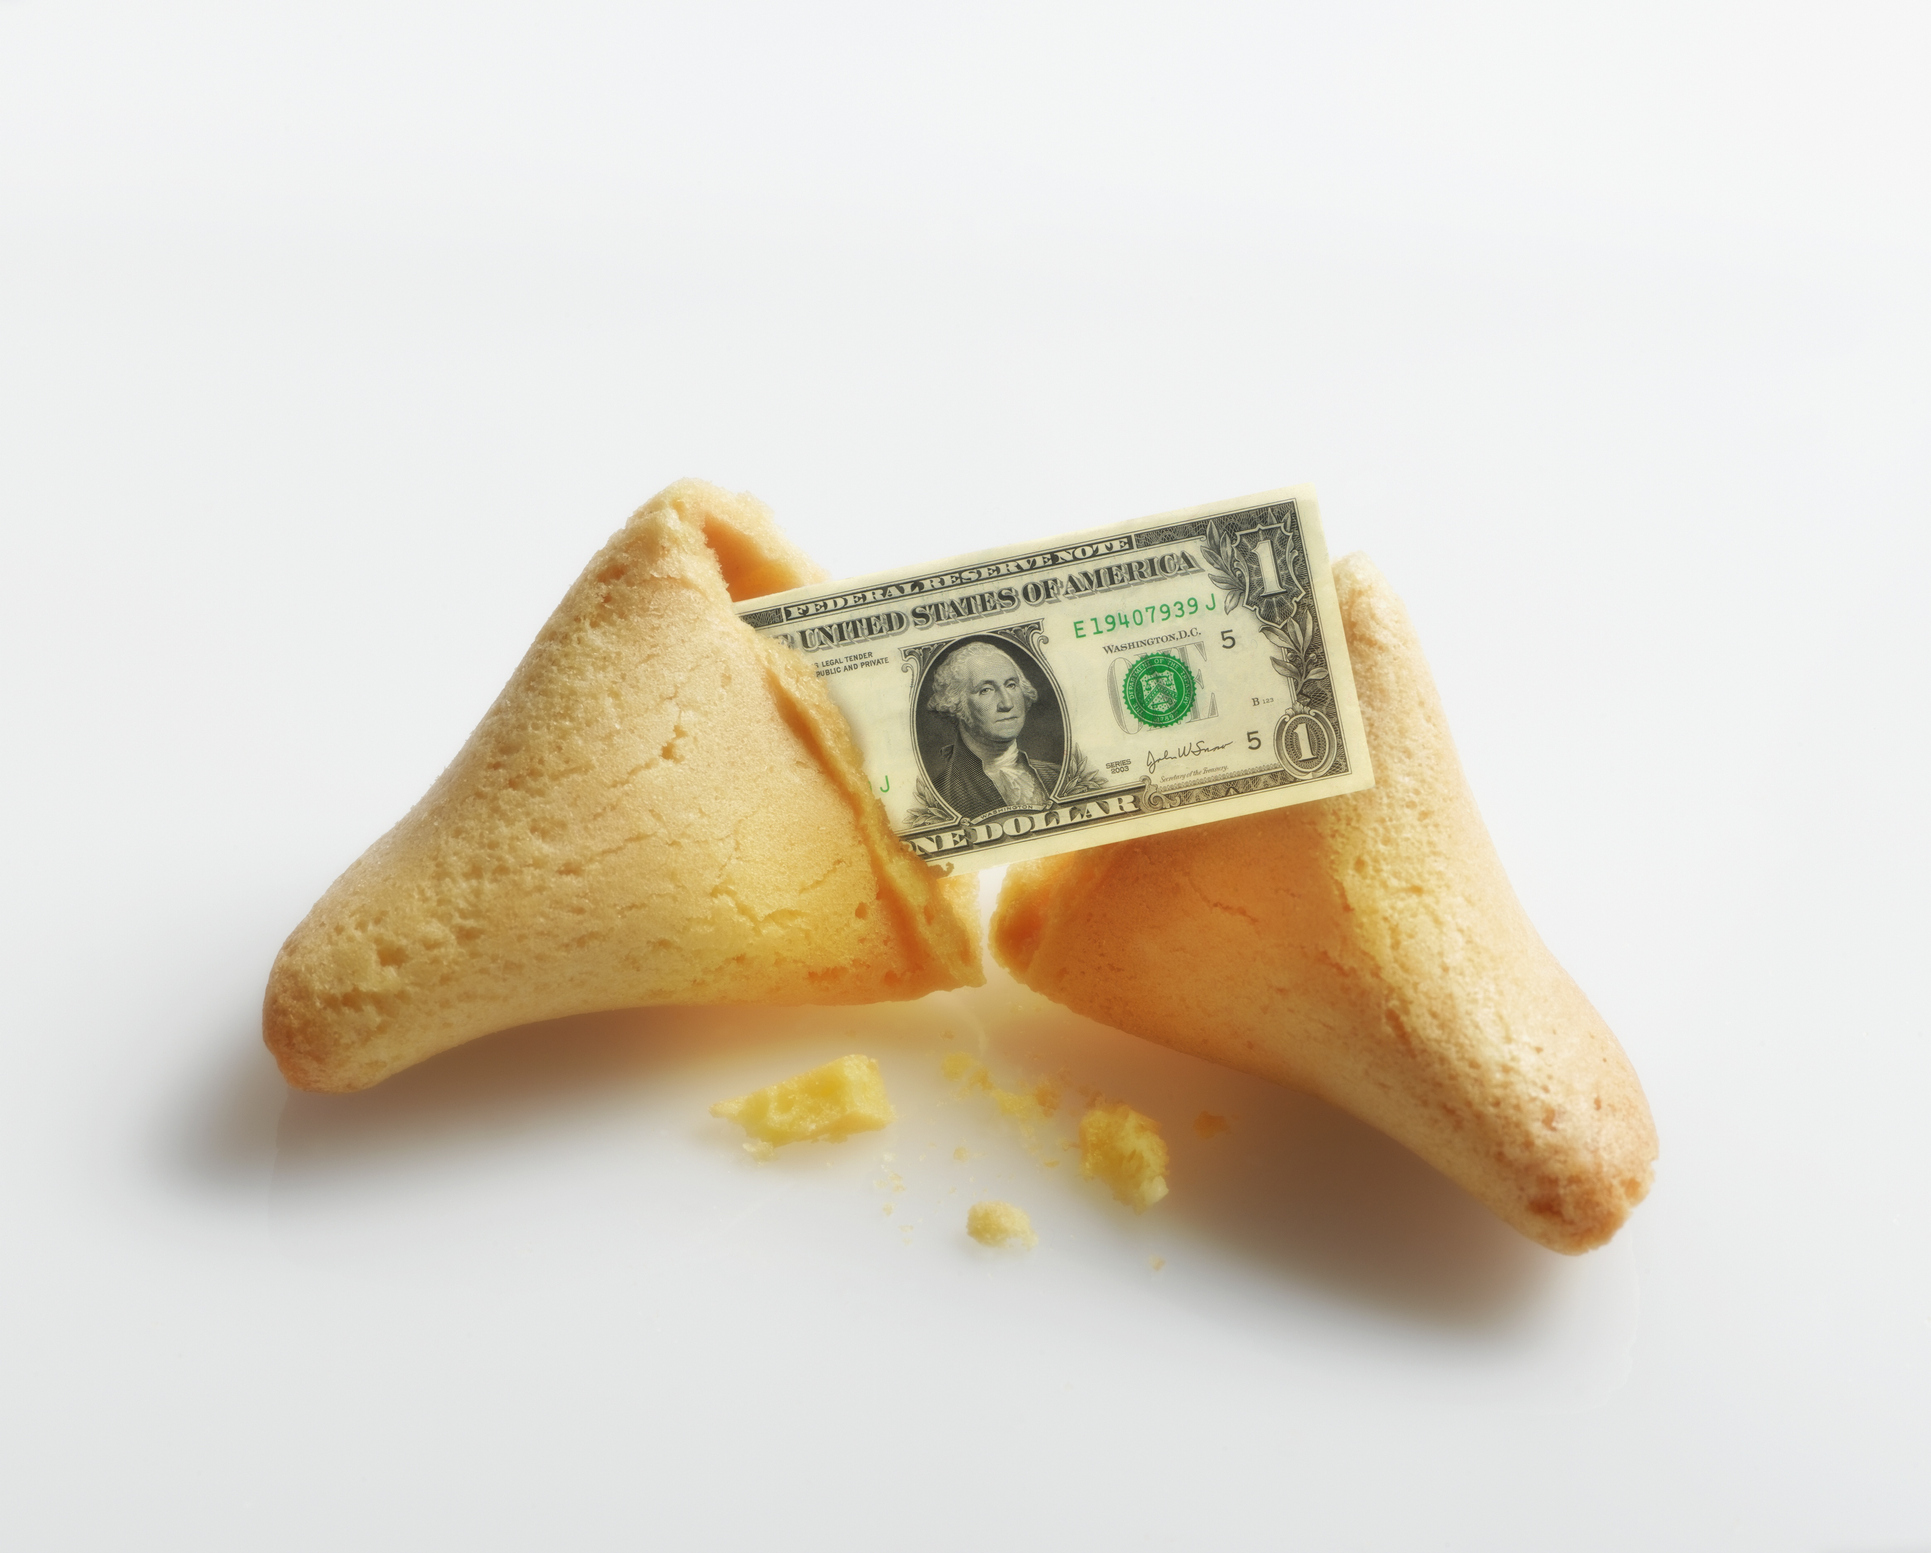 Broken fortune cookie with US Dollar inside